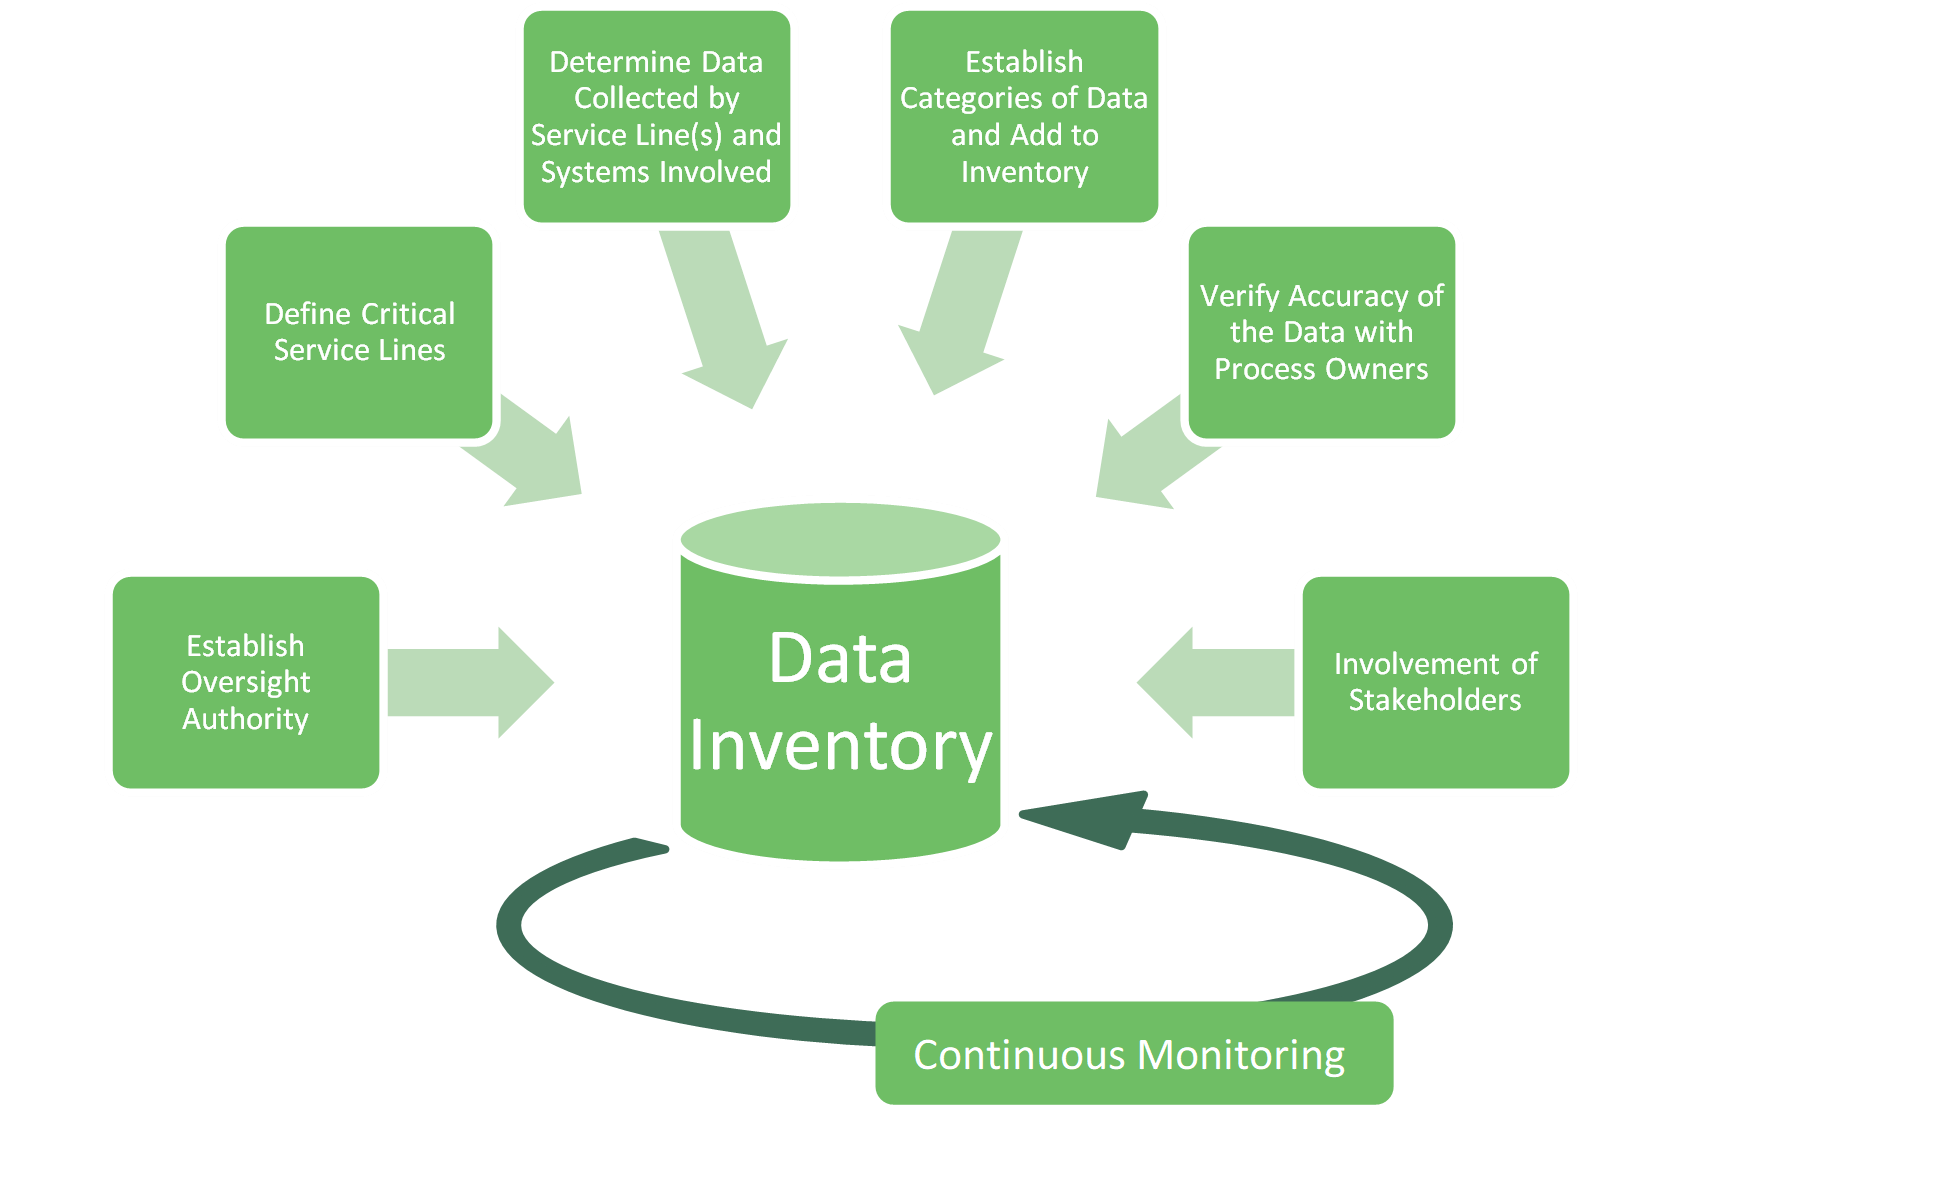 Data Inventory